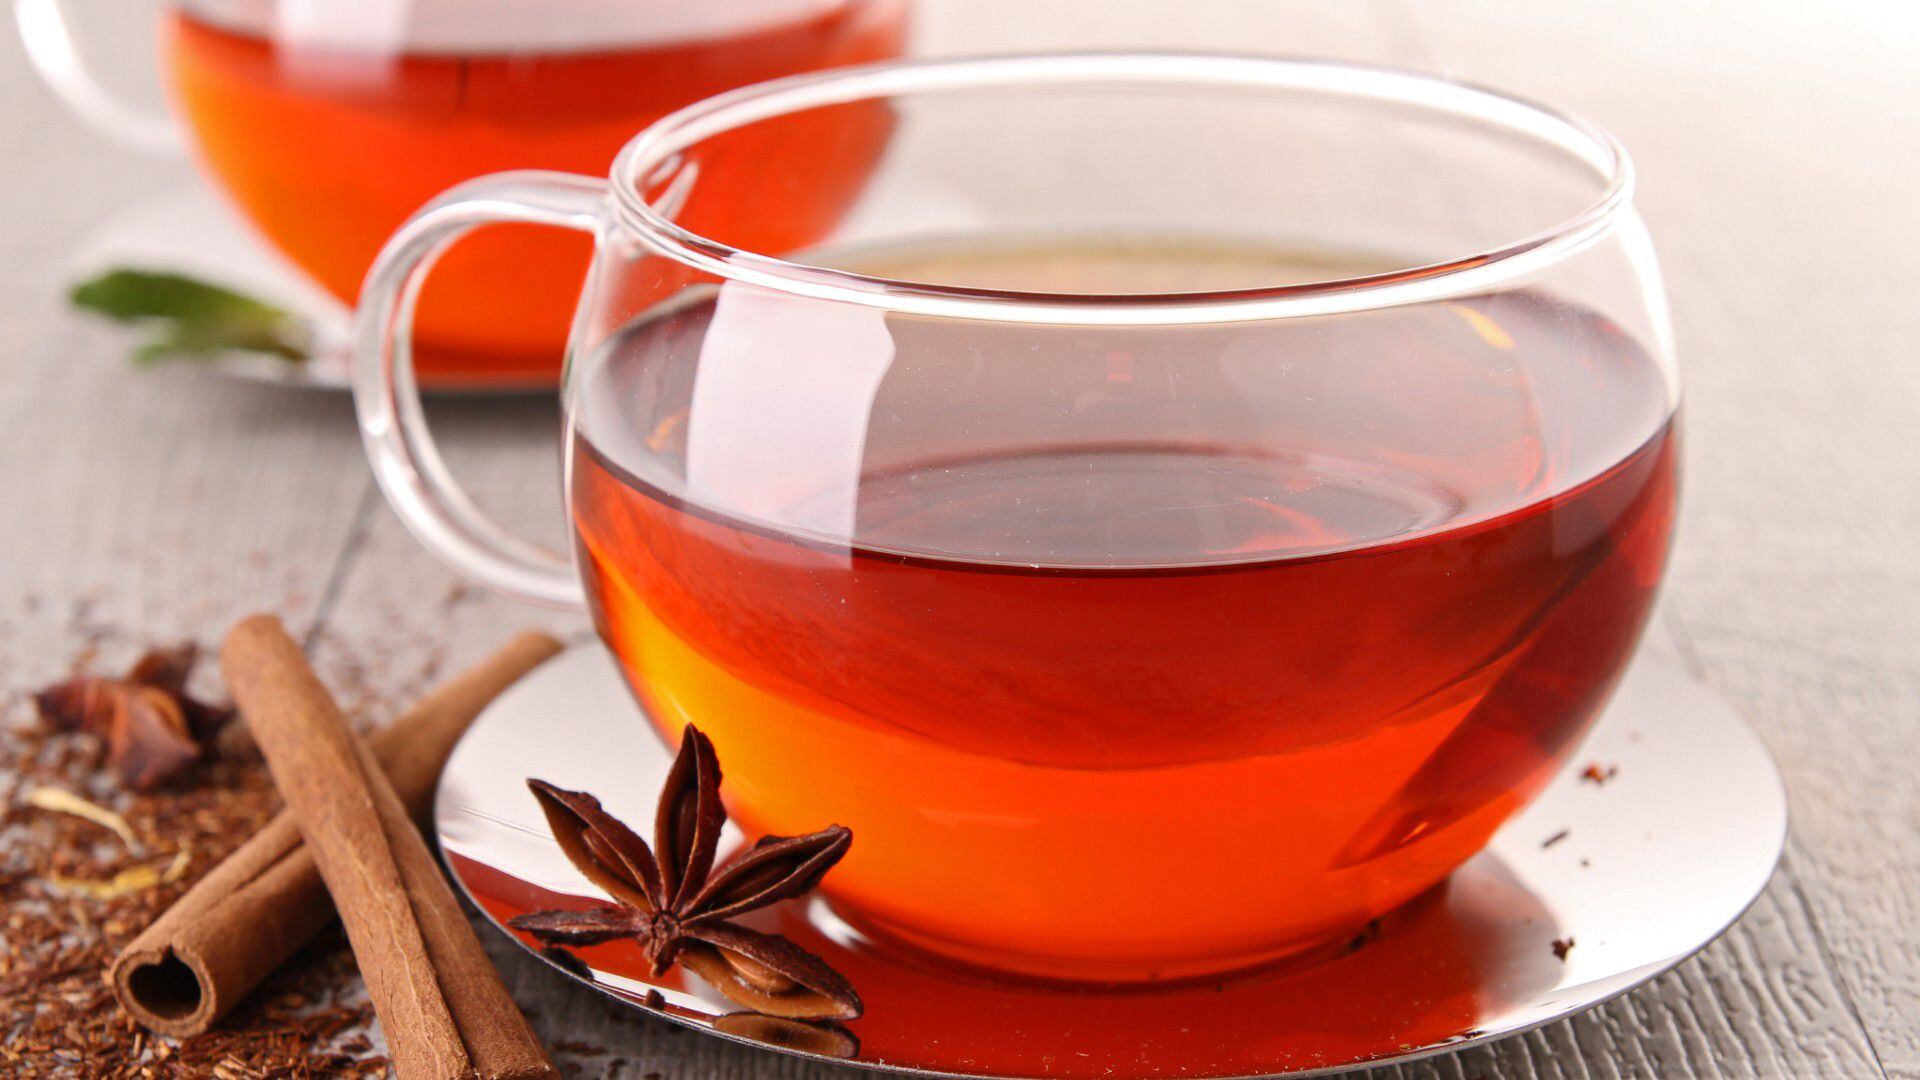 Cinnamon tea is good for health.